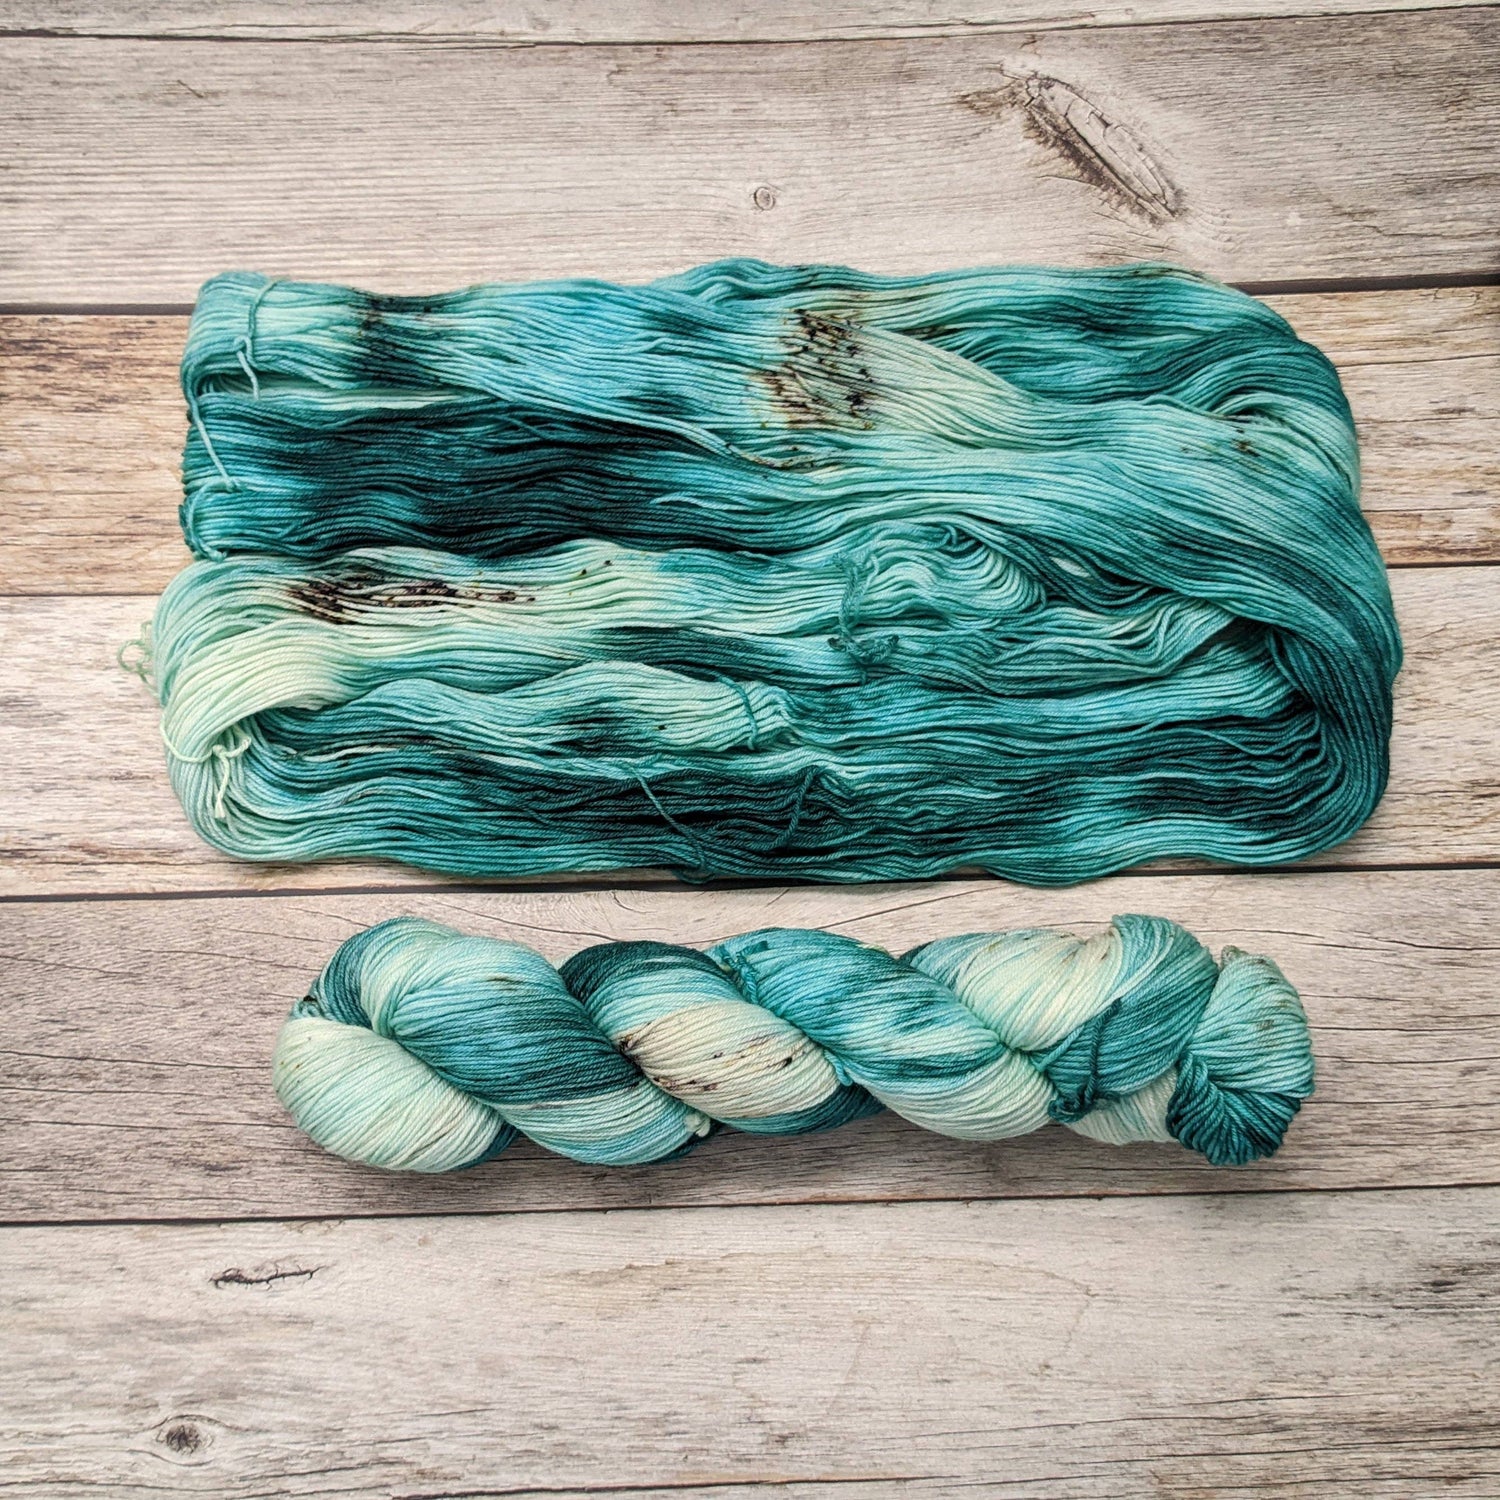 Lauritzen Dyed Fibers Hand Dyed Yarn in Colorway: Aspire Yarn